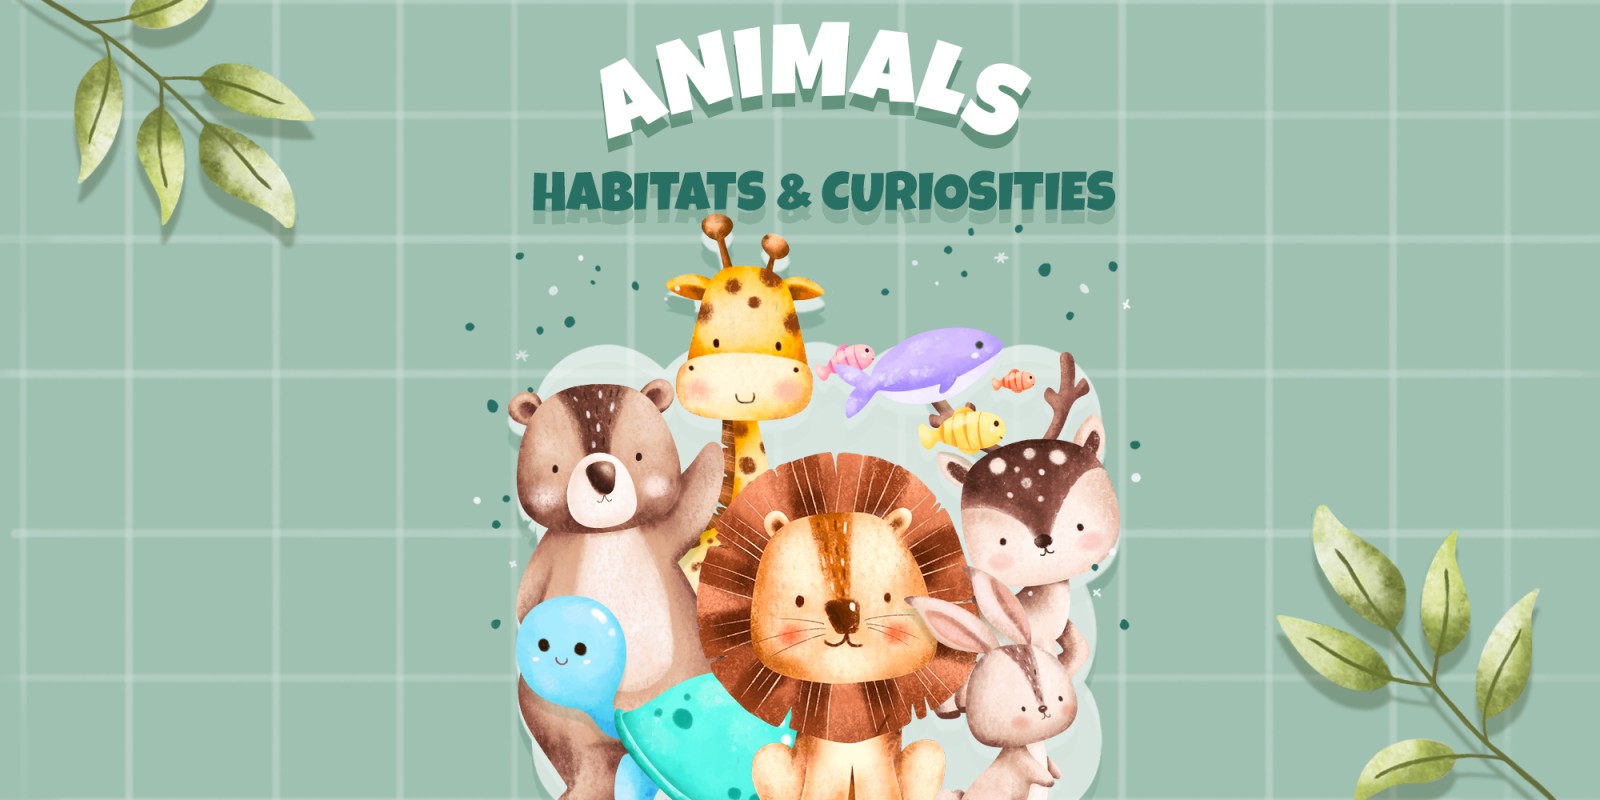 Animals - Habitats and Curiosities